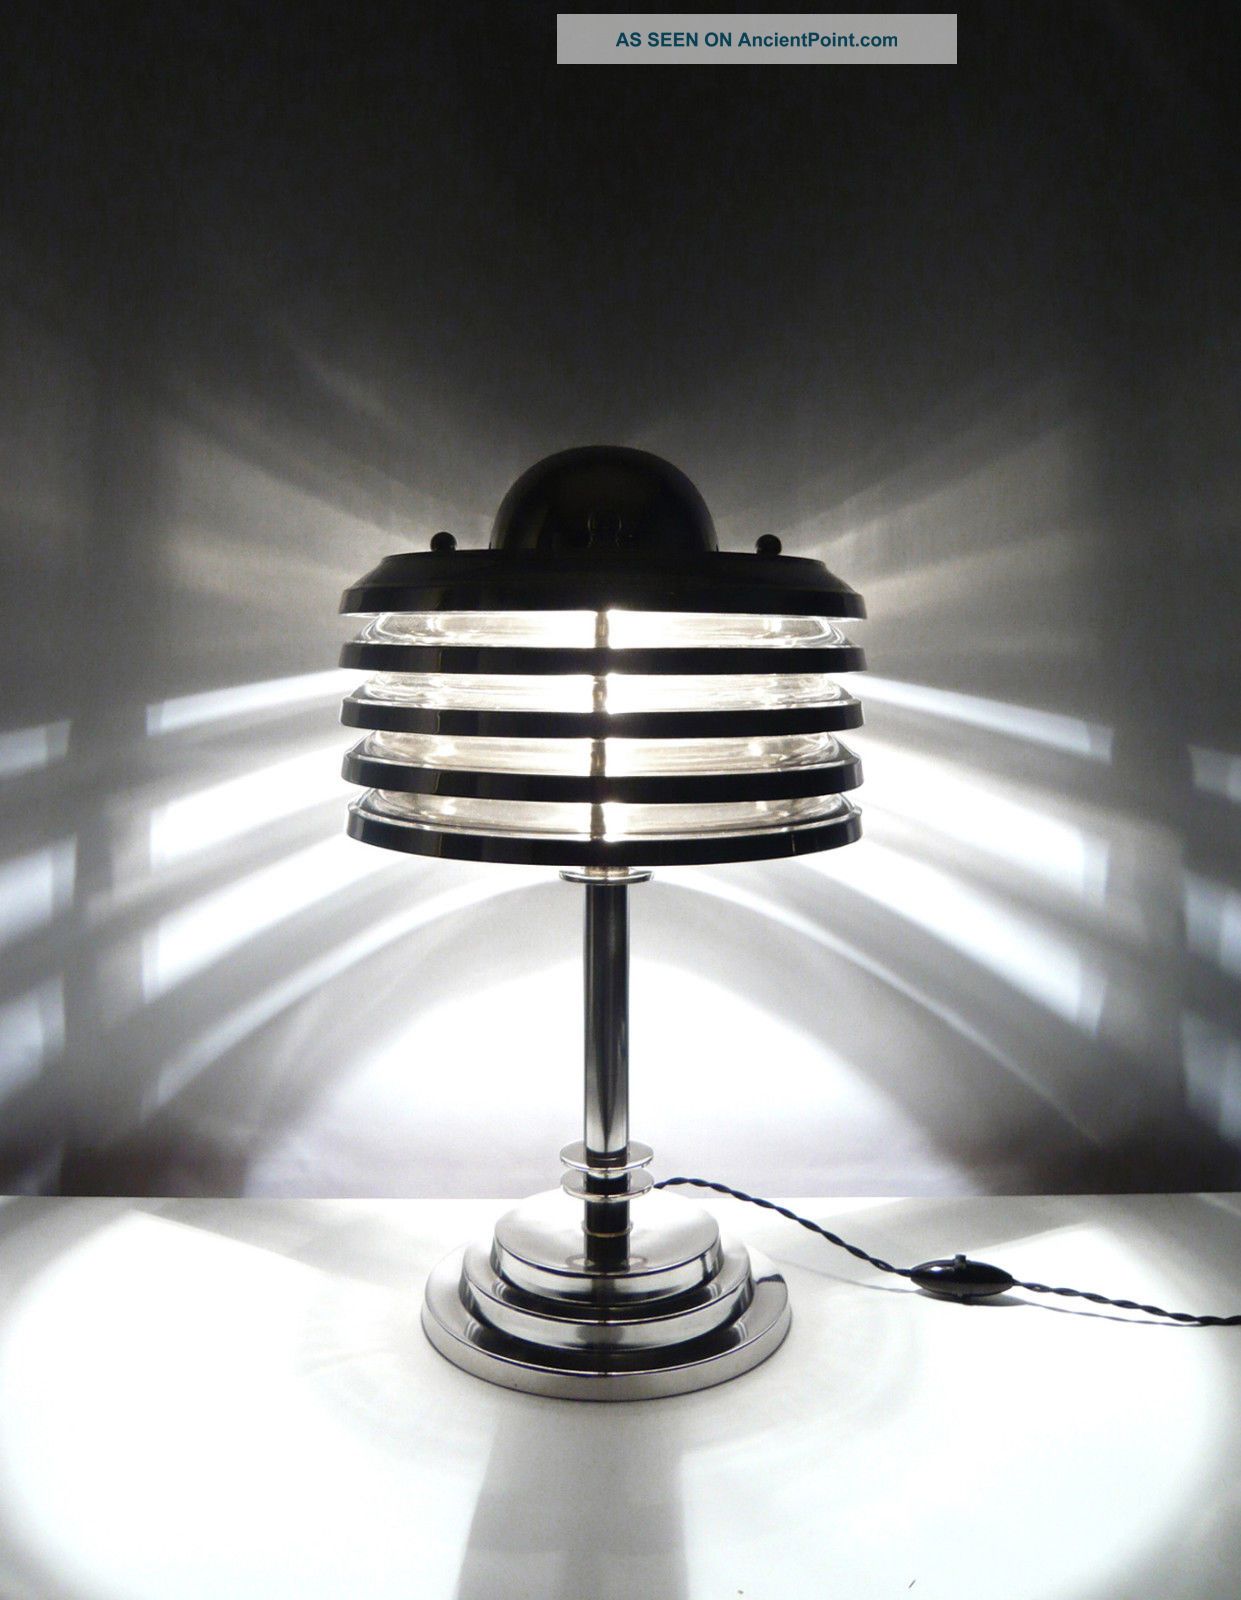 Art Deco Machine Age Modernist Lamp,  Base & Shade All Chrome (no Glass) - 47 Cm Lamps photo